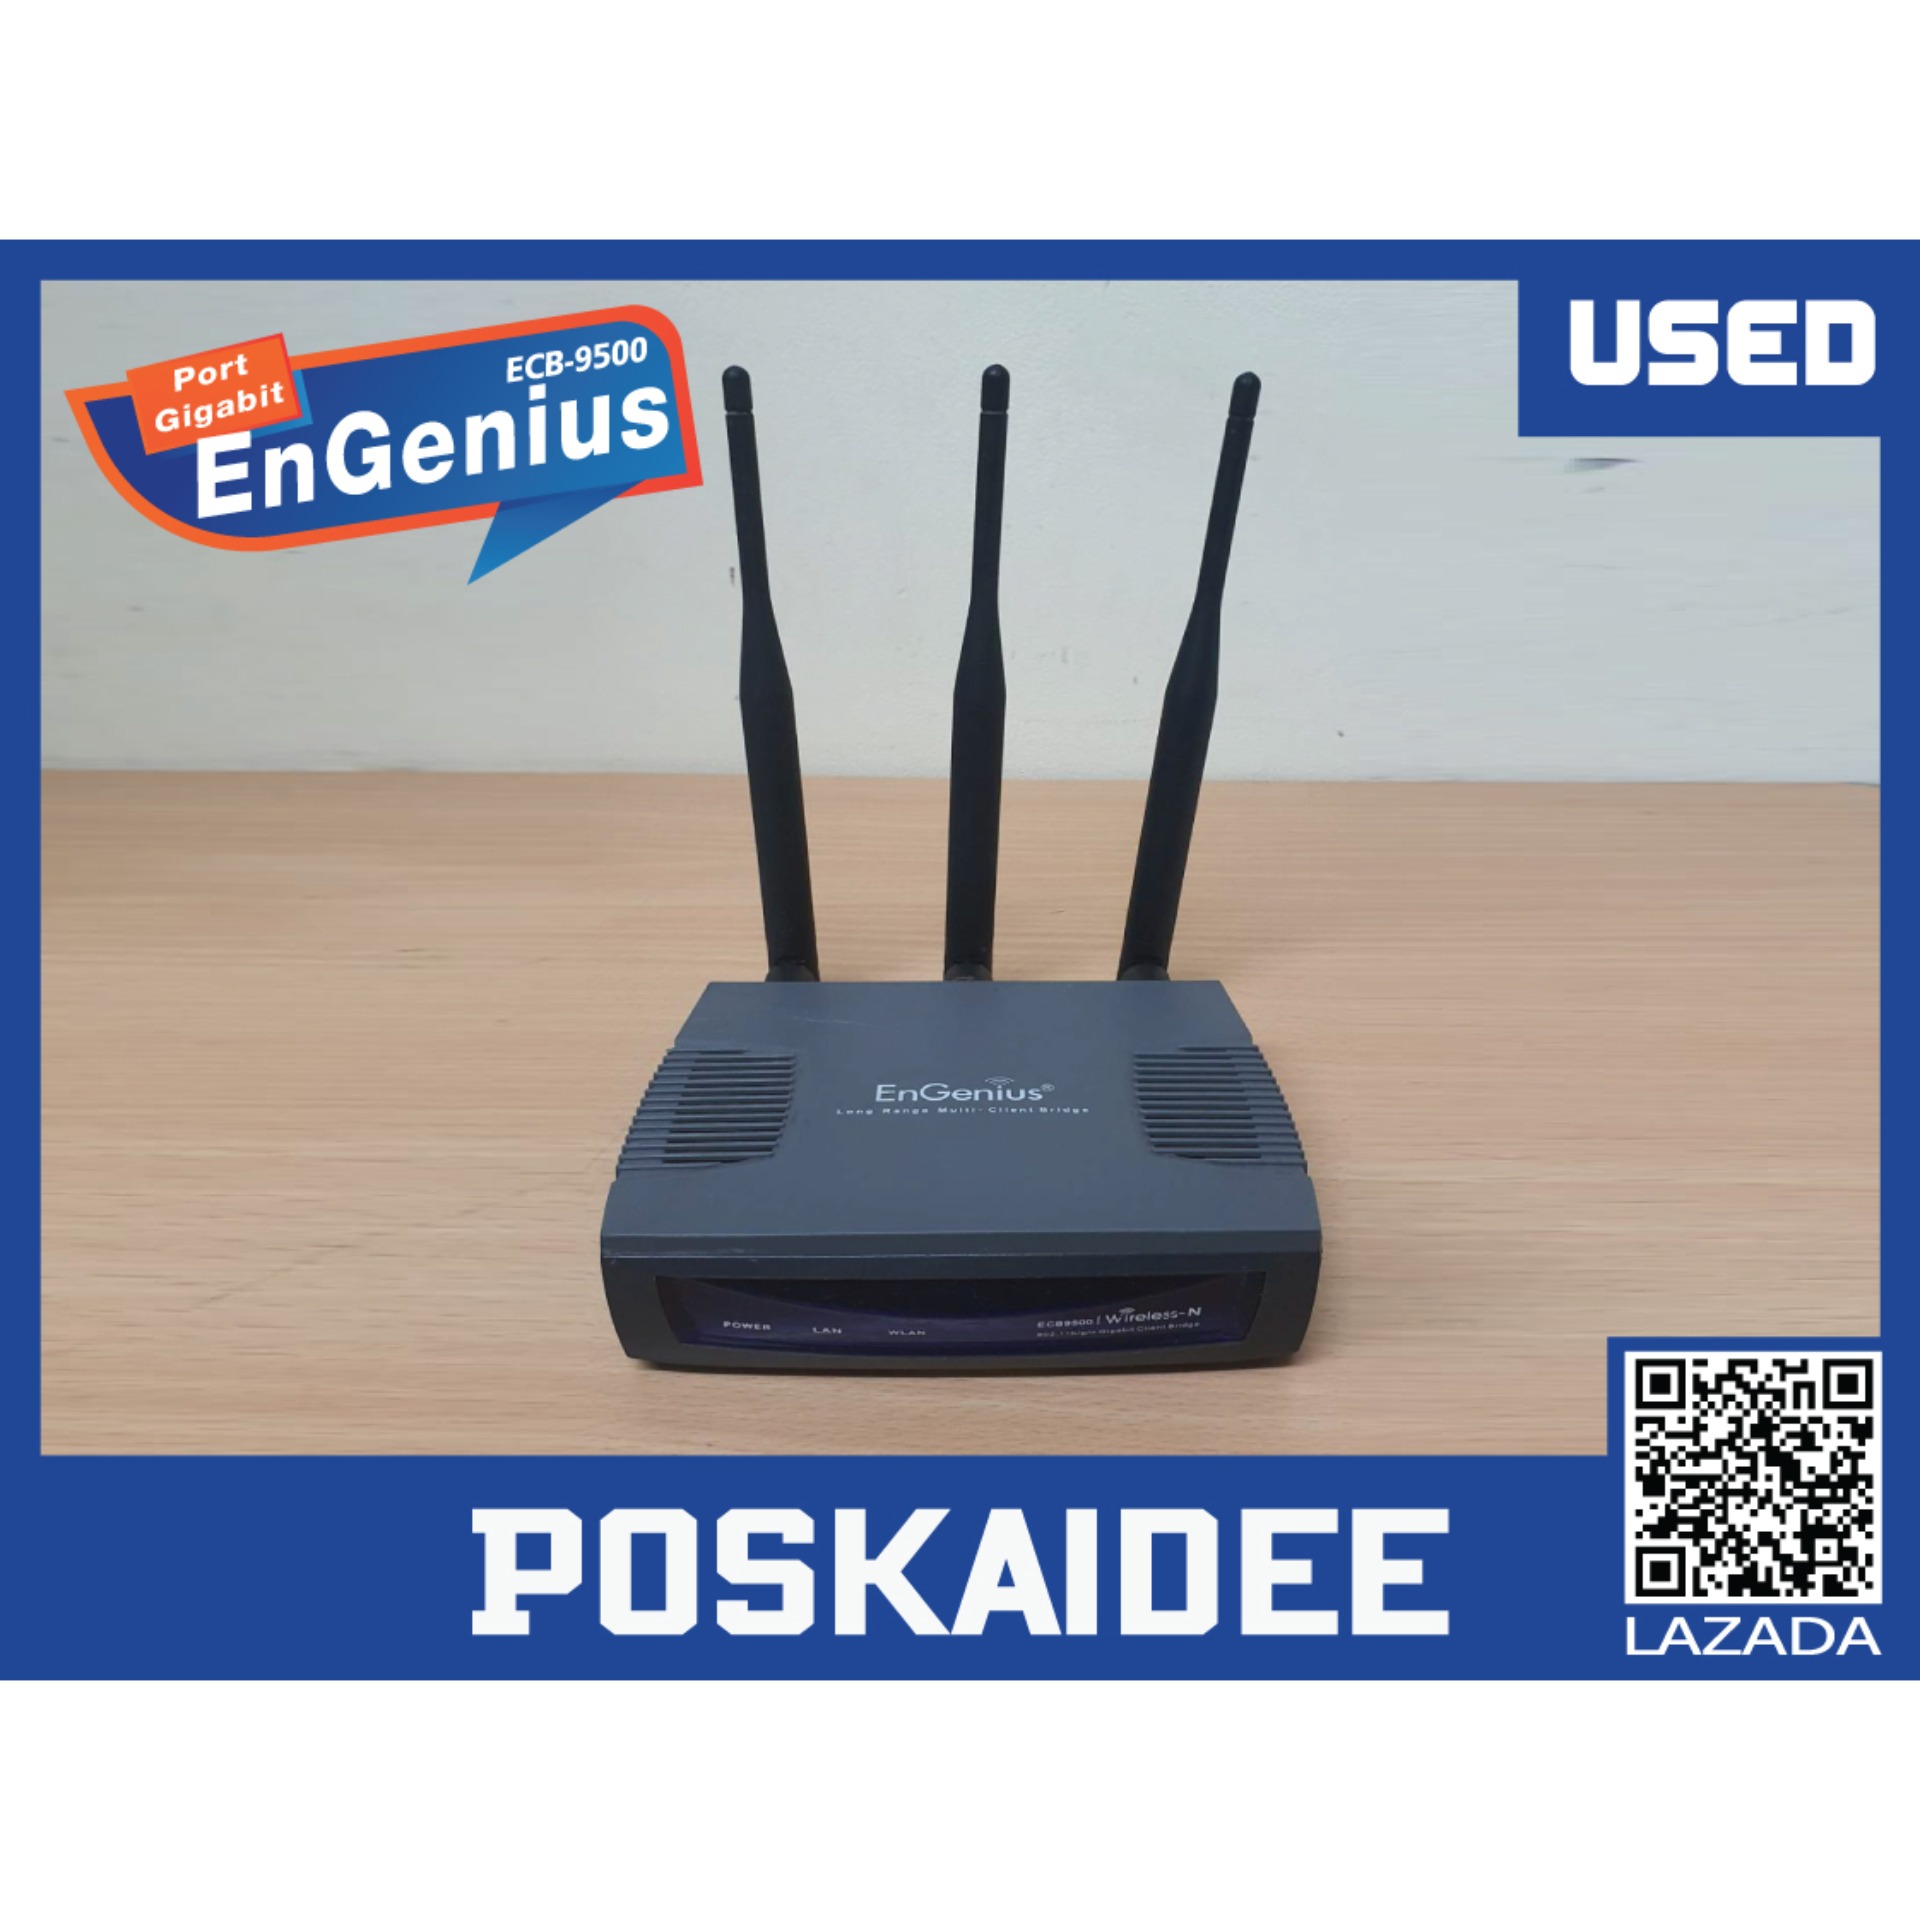 EnGenius ECB-9500 Access Point ความถี่ 2.4GHz ความเร็ว 300Mbps Port Gigabit รองรับ Mode Repeaterมือสอง